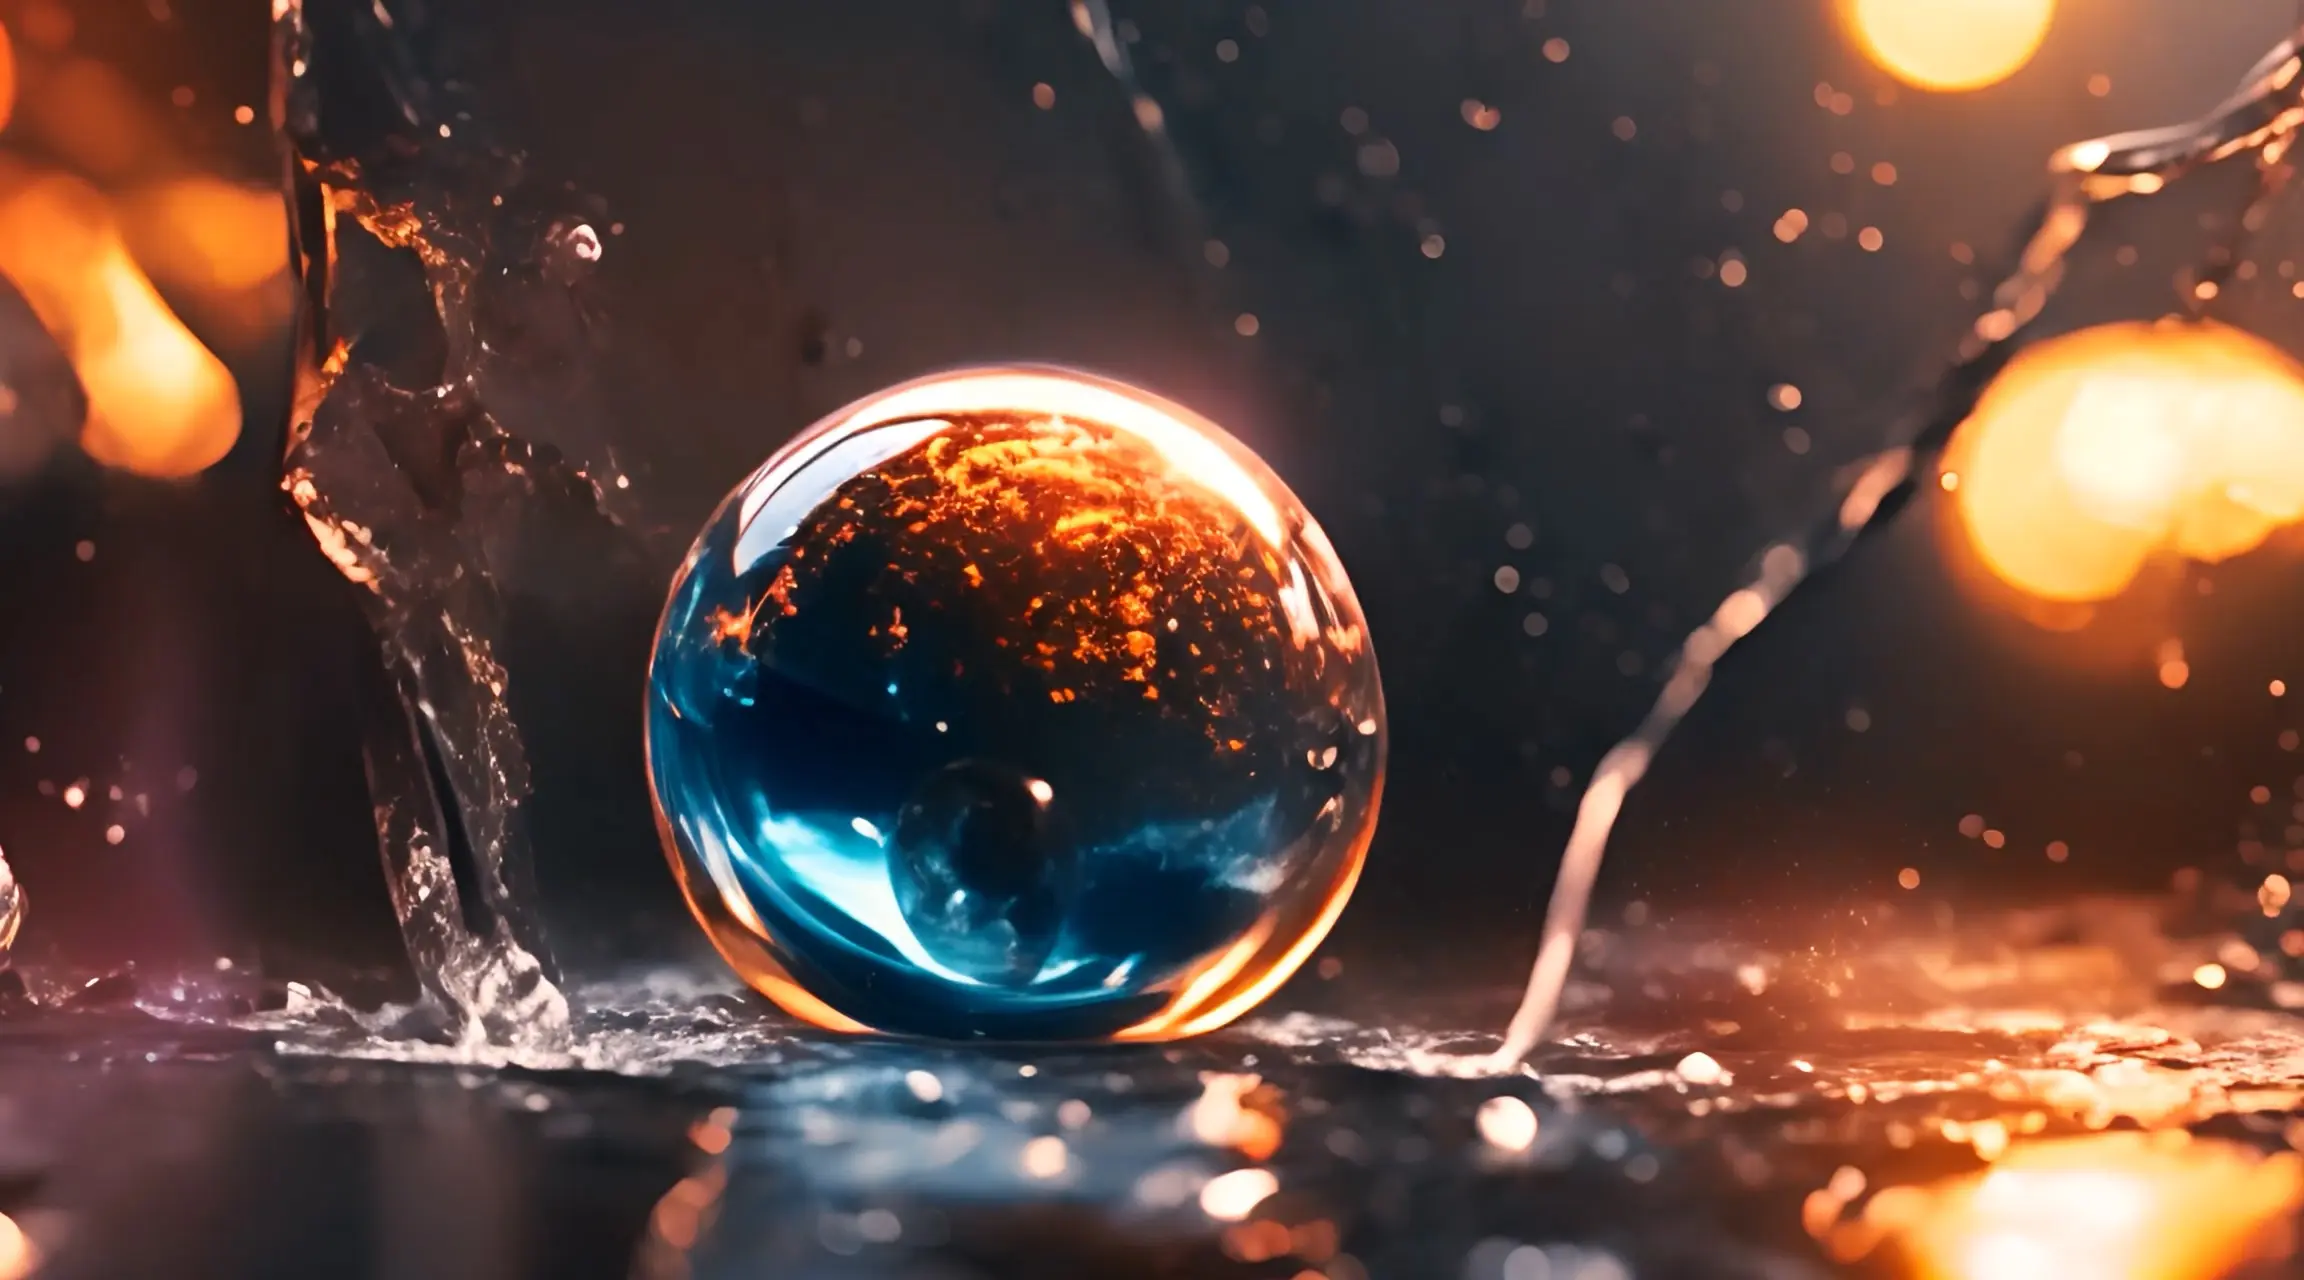 Eruptive Crystal Sphere Dynamic Stock Video